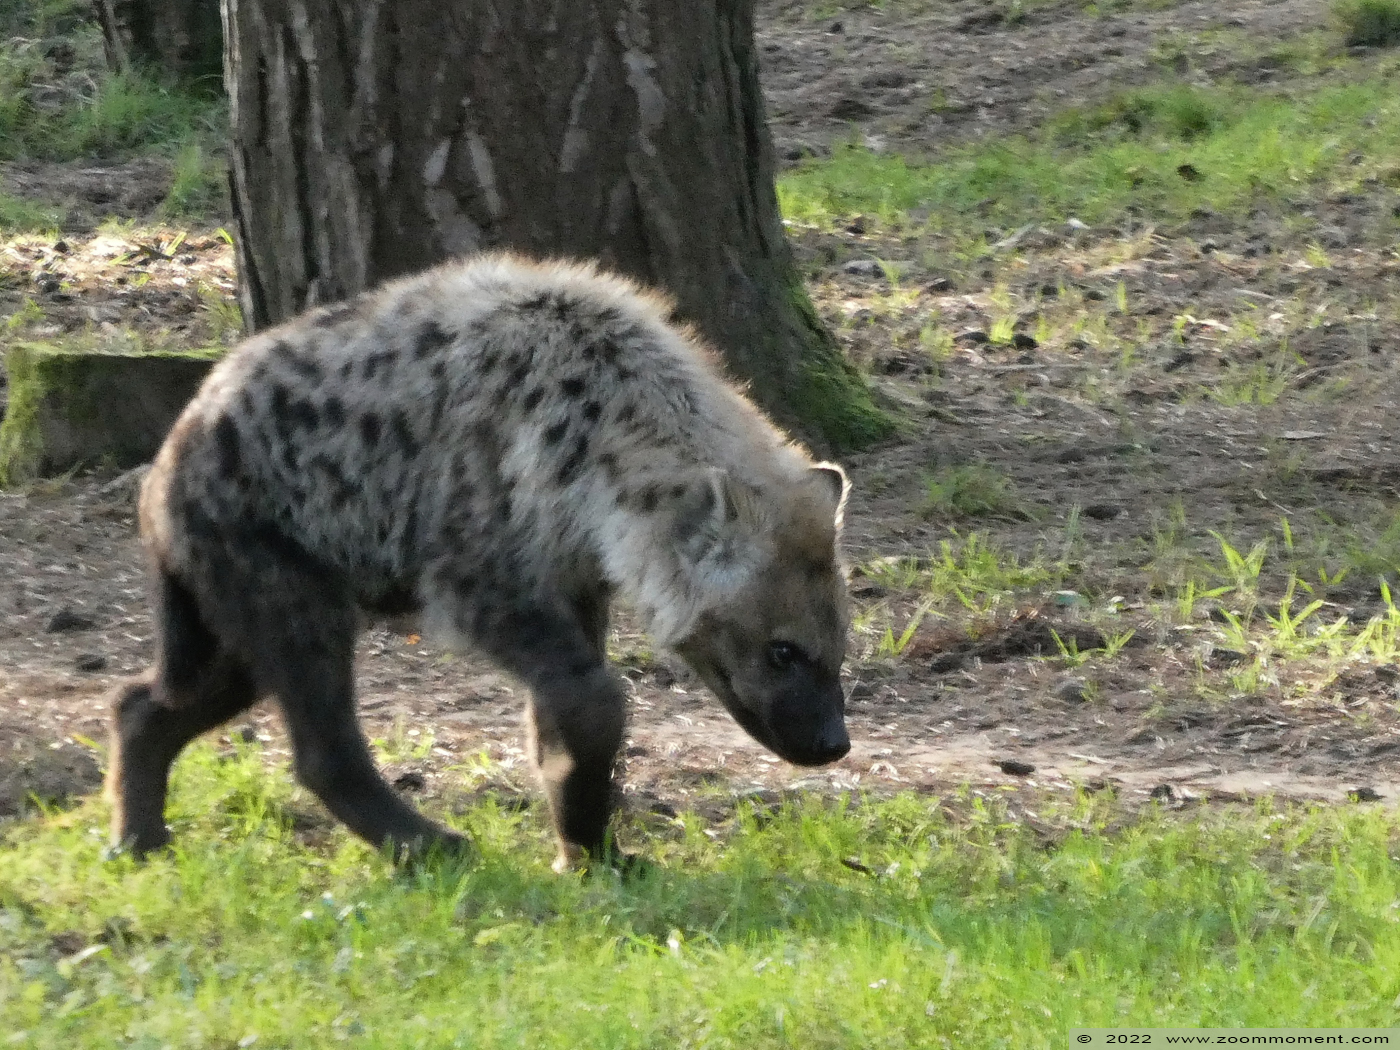 gevlekte hyena ( Crocuta crocuta ) spotted hyena
Trefwoorden: Safaripark Beekse Bergen gevlekte hyena Crocuta crocuta spotted hyena